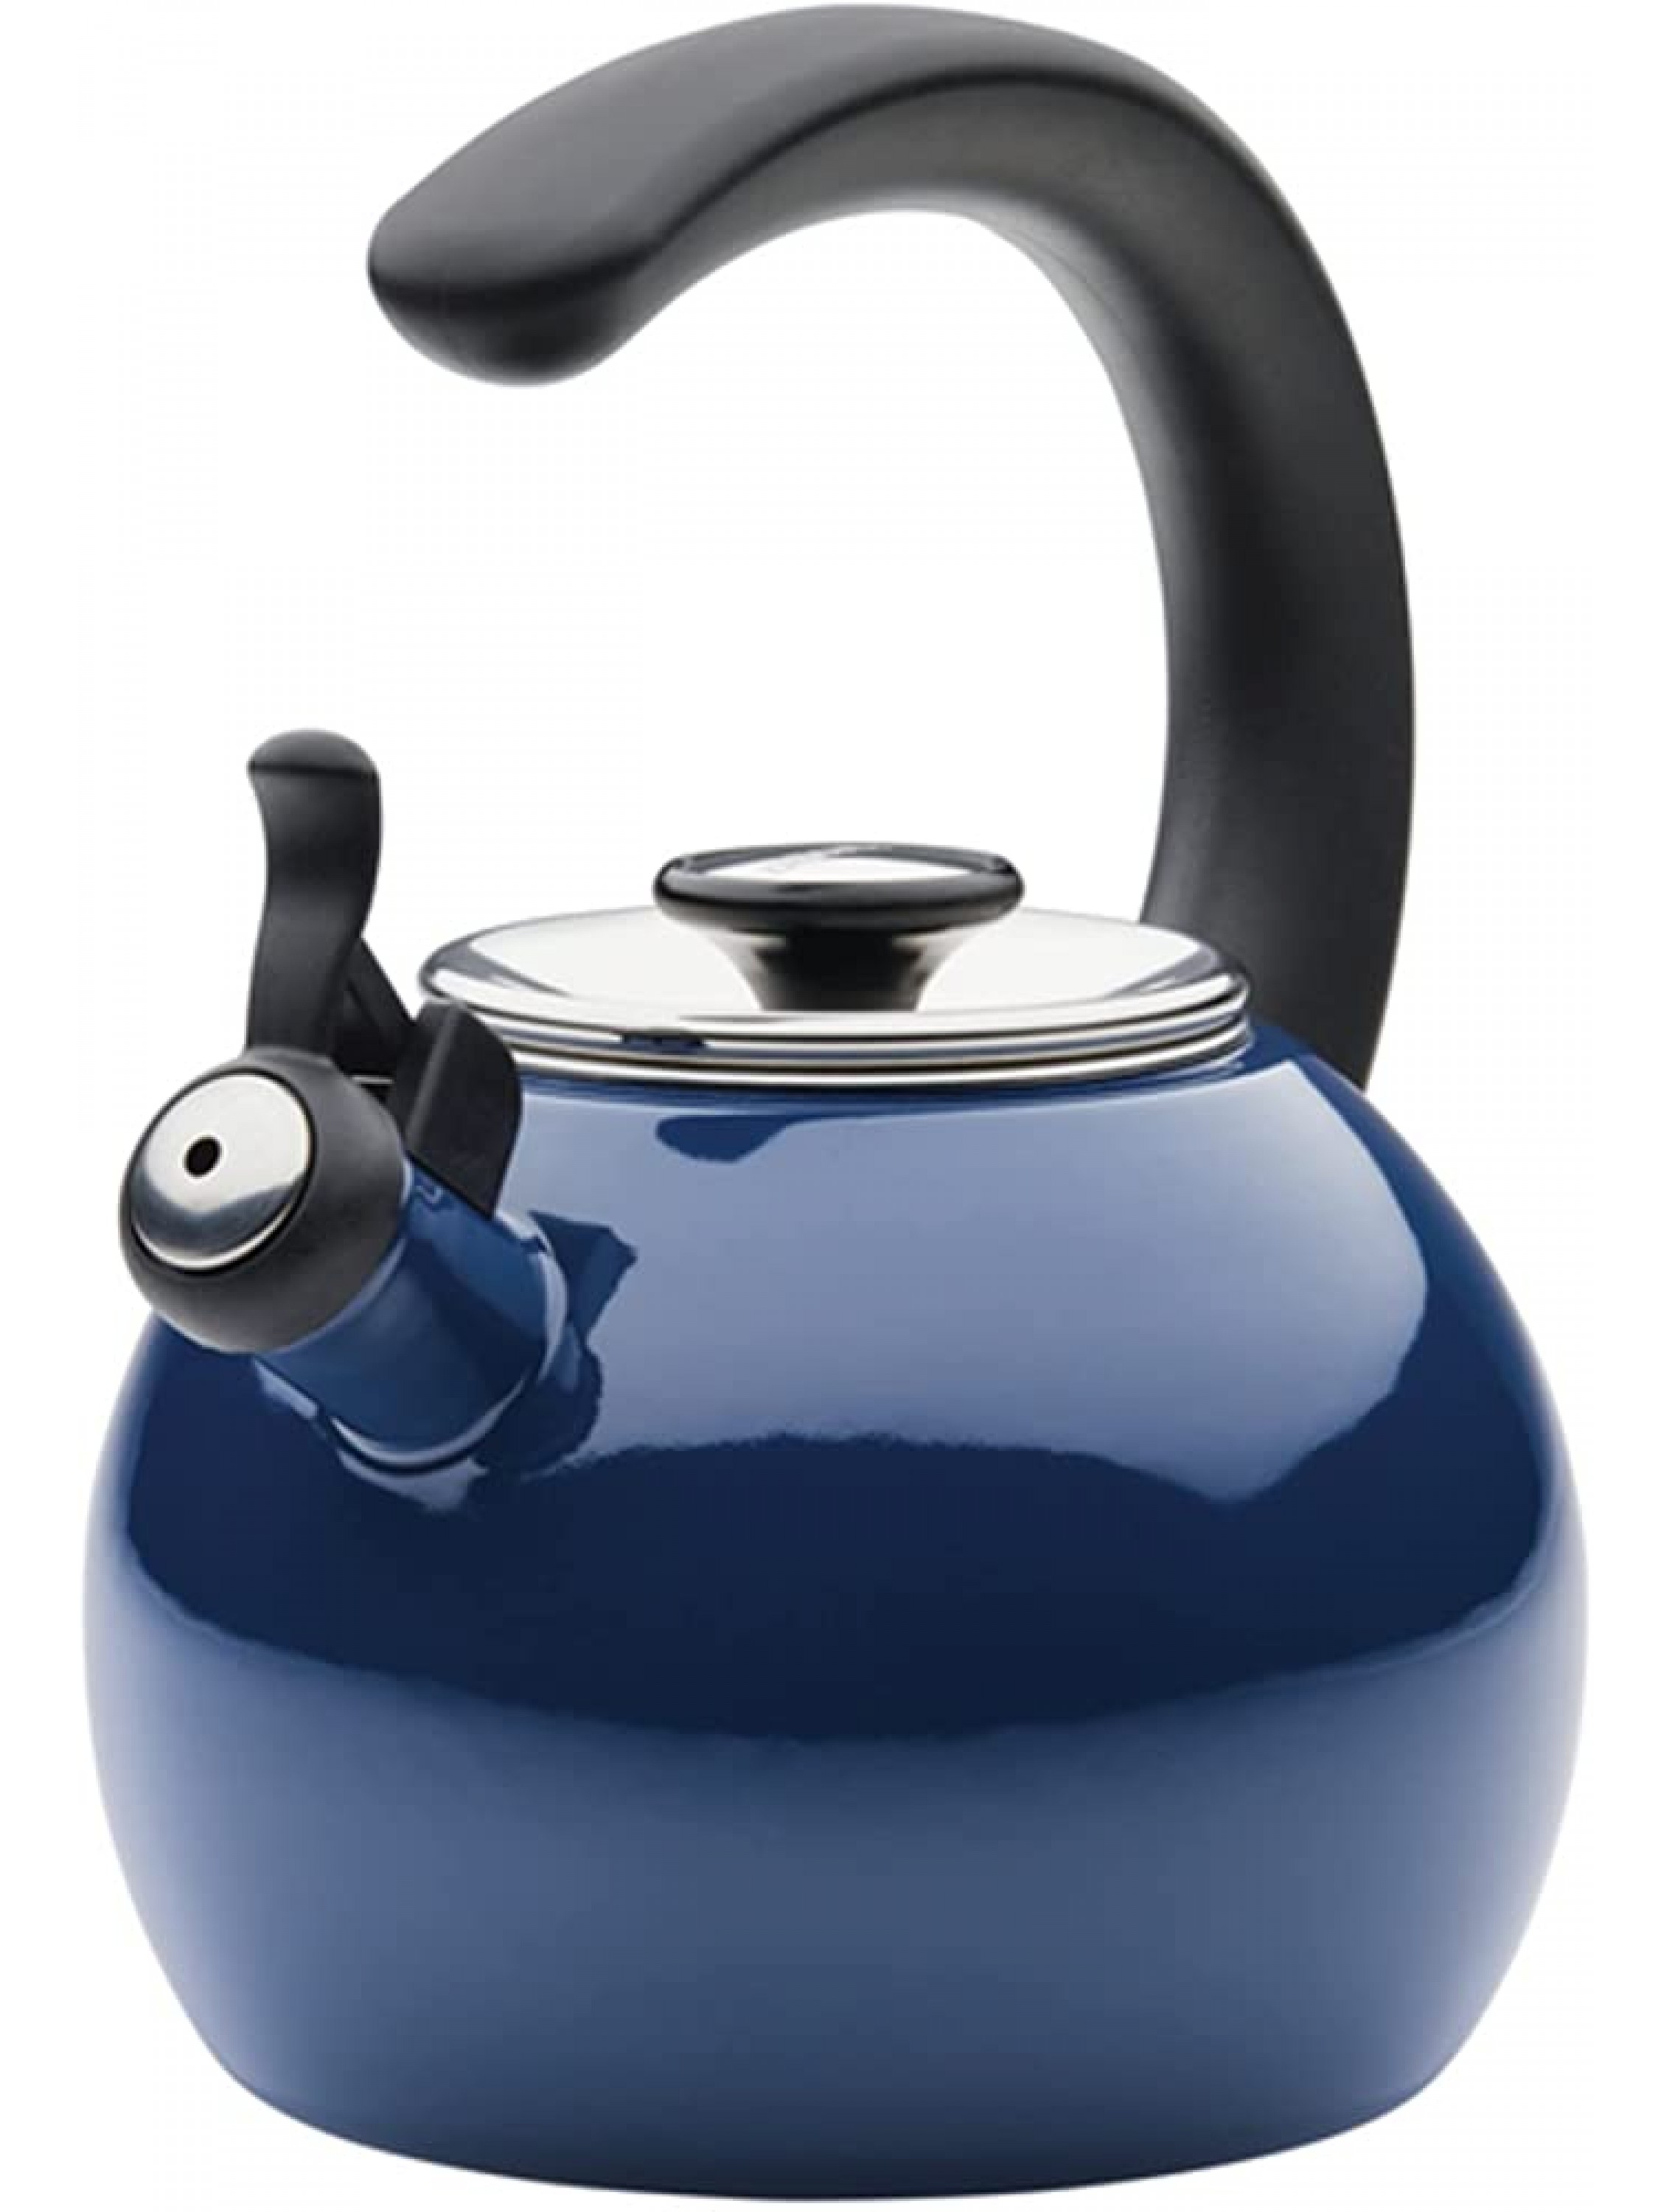 Circulon Enamel on Steel Whistling Teakettle Teapot With Flip-Up Spout 2 Quart Navy - BTUNY3H2U